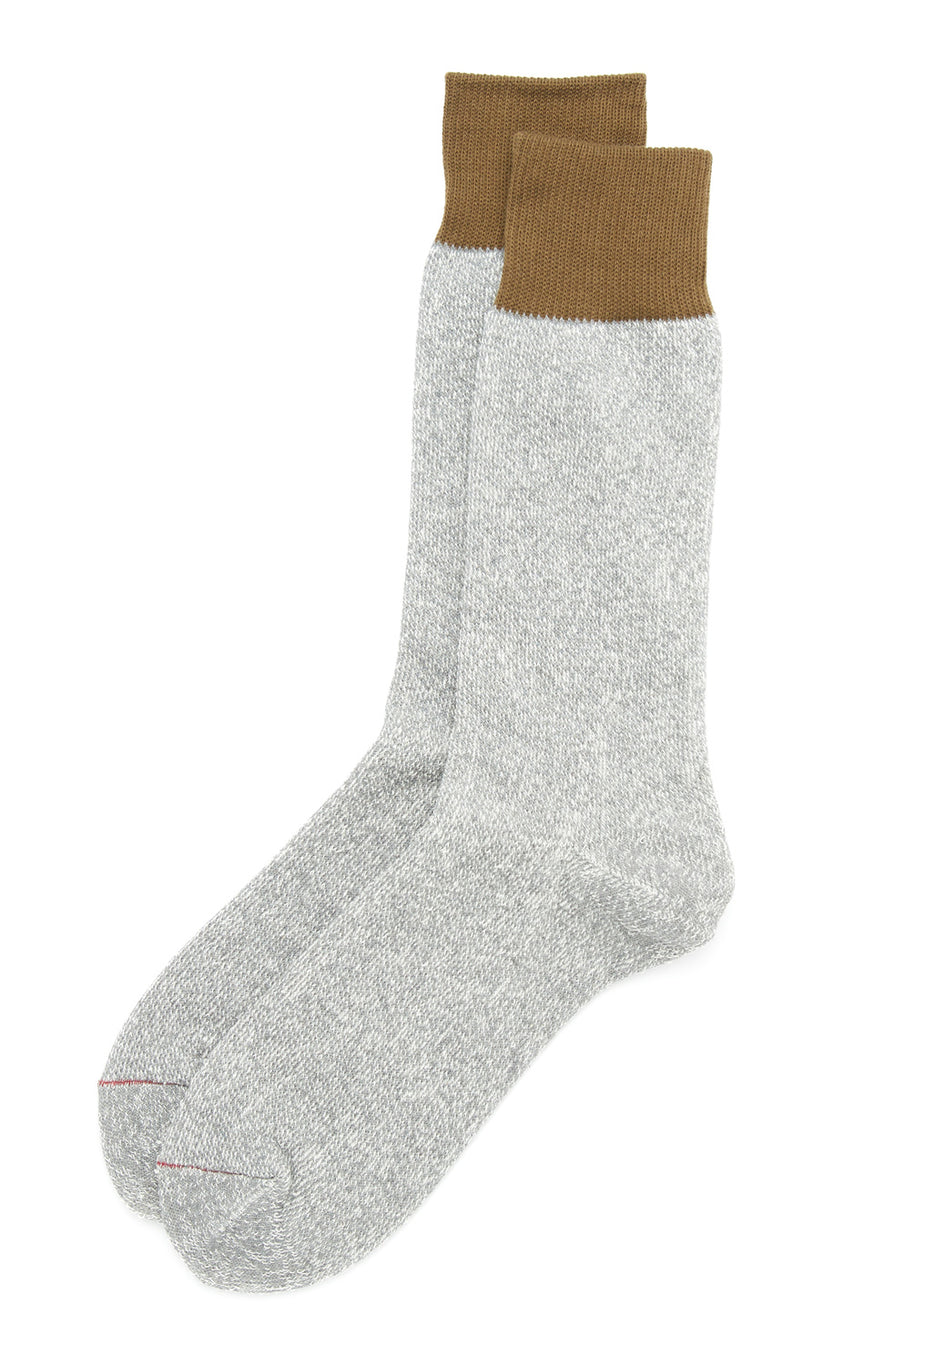 Rototo Silk & Cotton Double Face Crew Socks - Olive / Gray